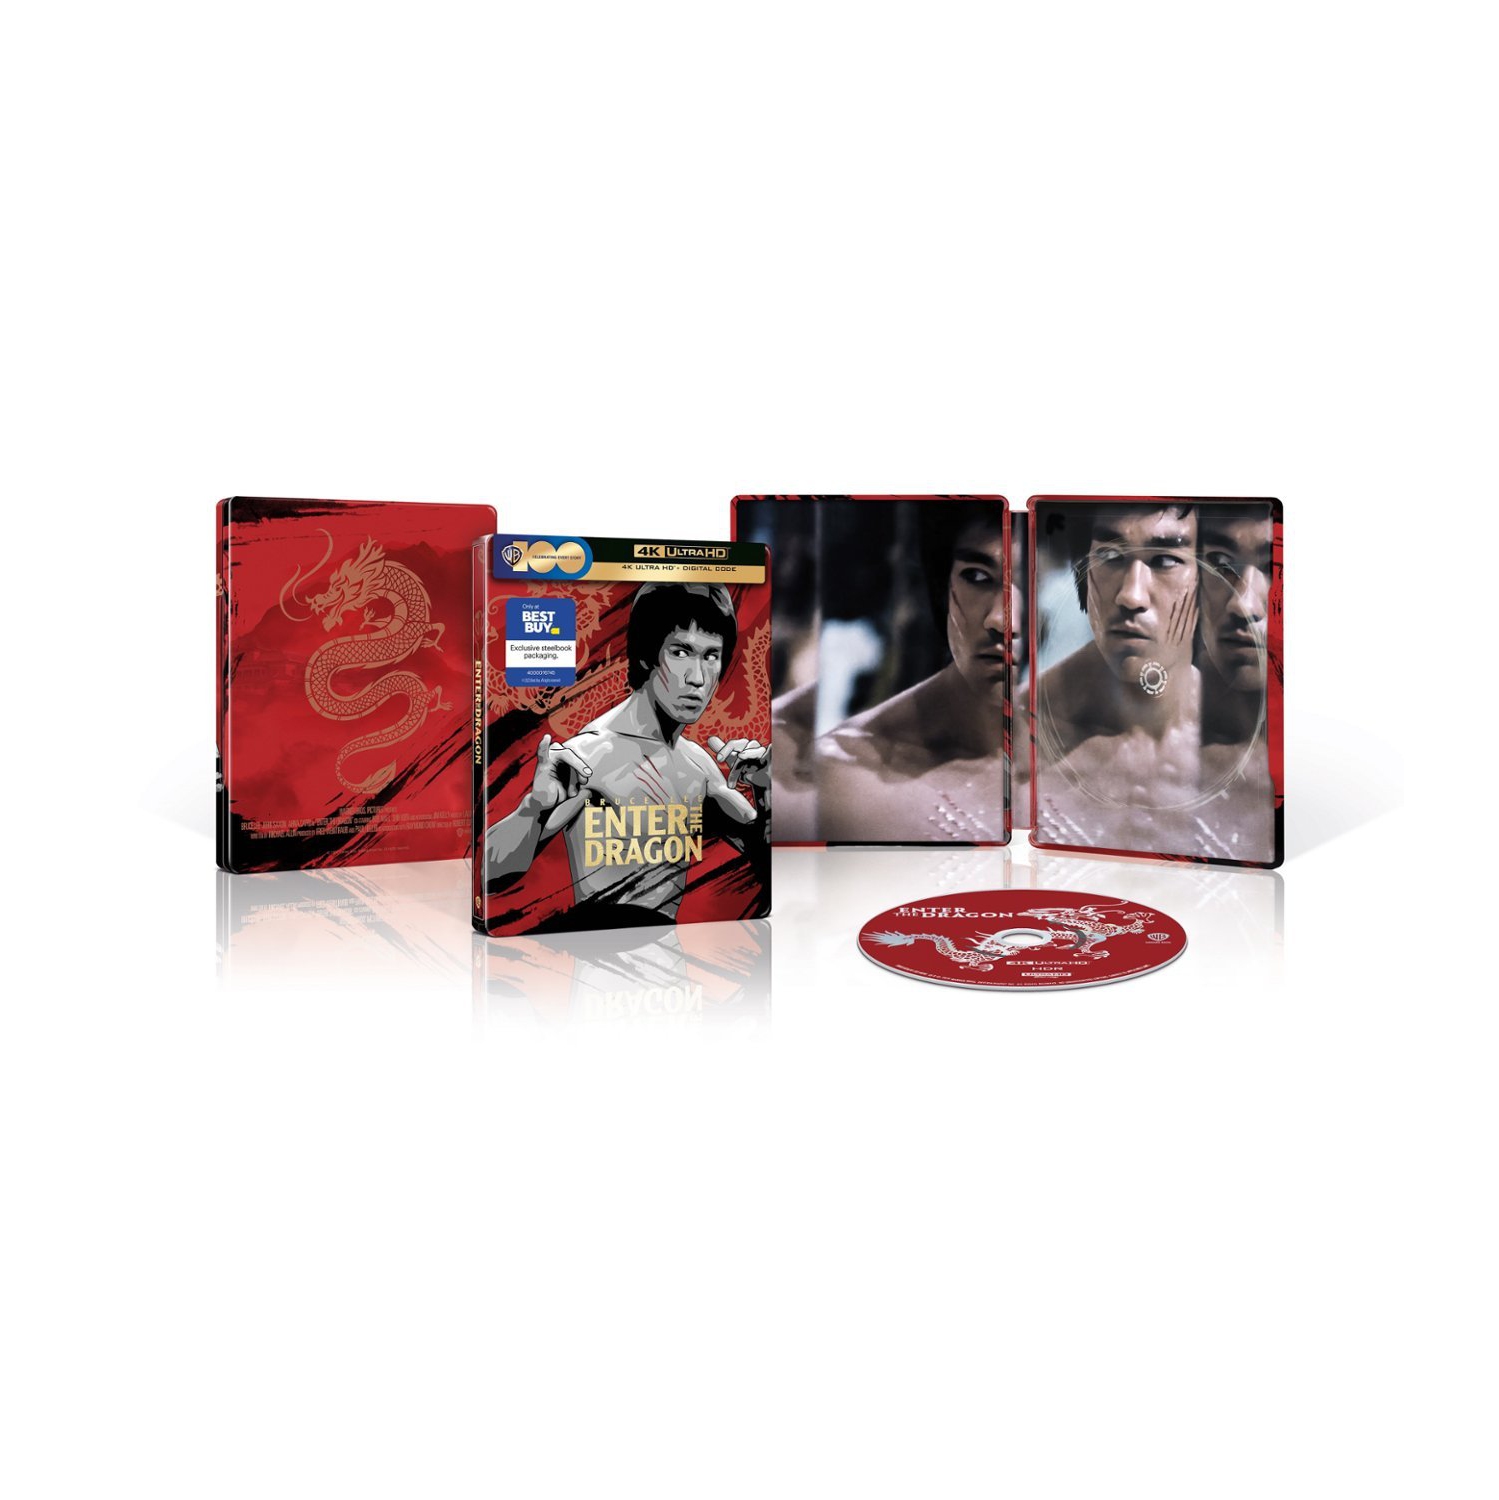 Enter the Dragon [Steelbook] Bruce Lee [Includes Digital Copy] [4k Ultra HD Blu-ray]